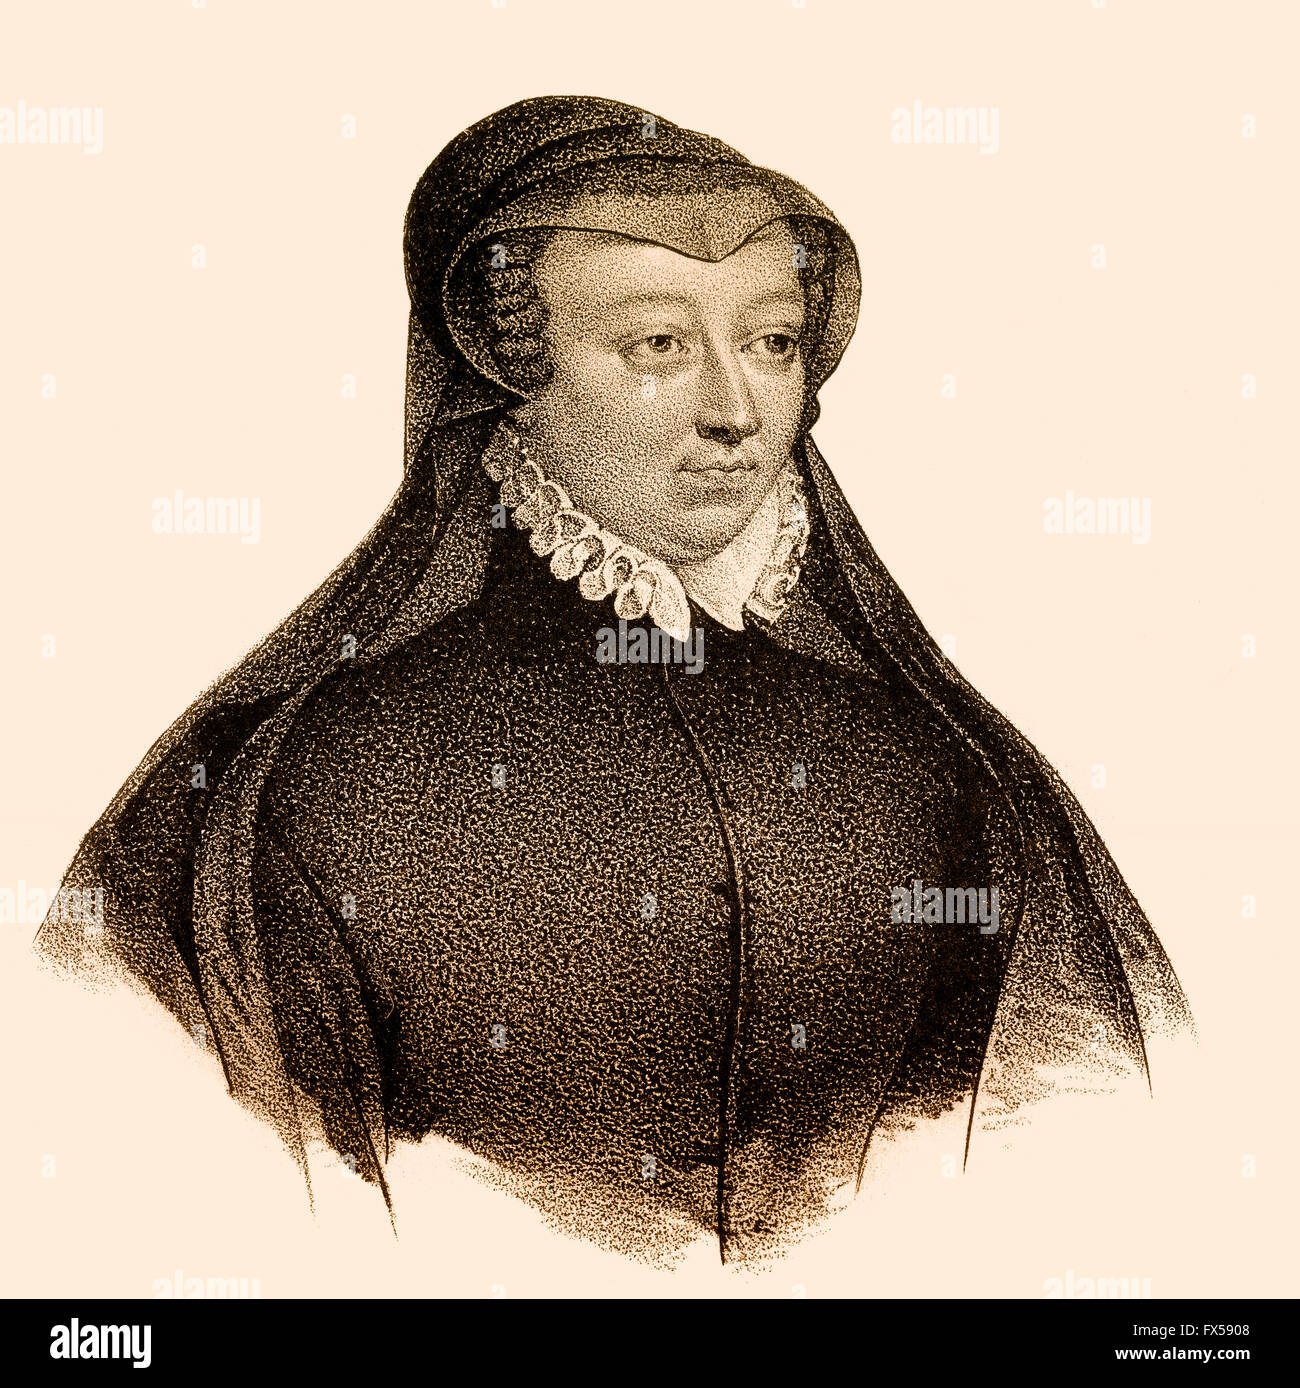 Catherine de' Medici, Catherine de Médicis, 1519-1589, Queen of France as the wife of King Henry II Stock Photo